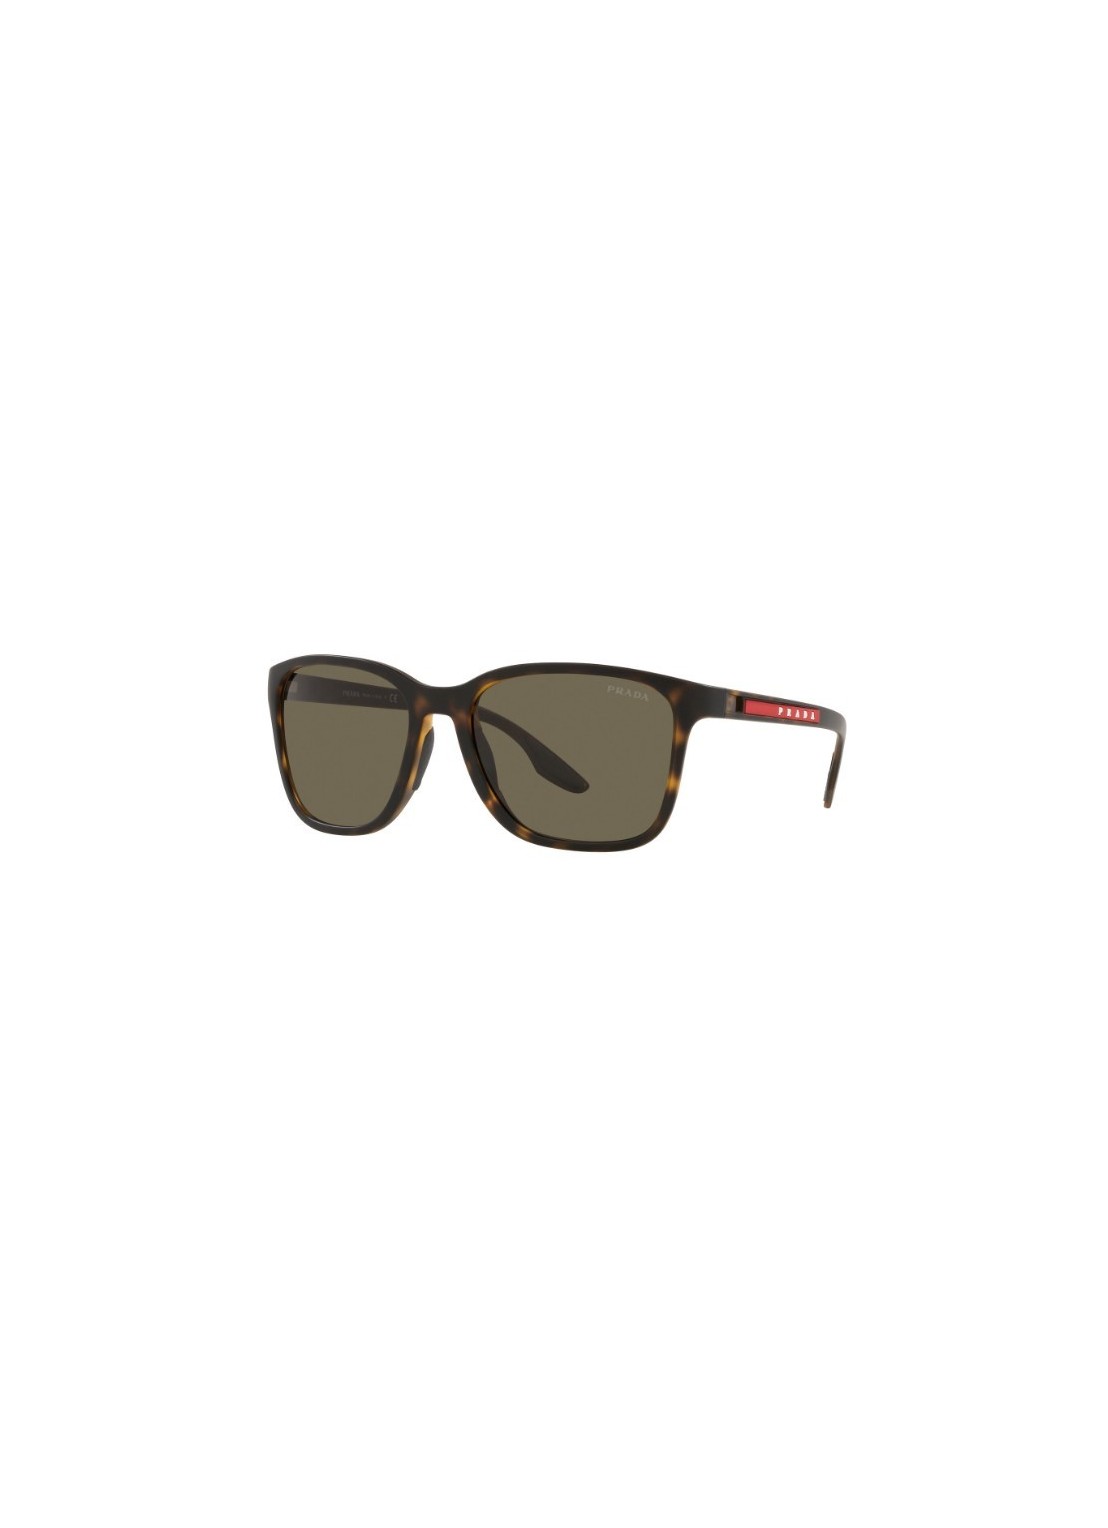 Gafas prada sunglasses woman 0ps02ws 0ps02ws 58106h talla transparente
 